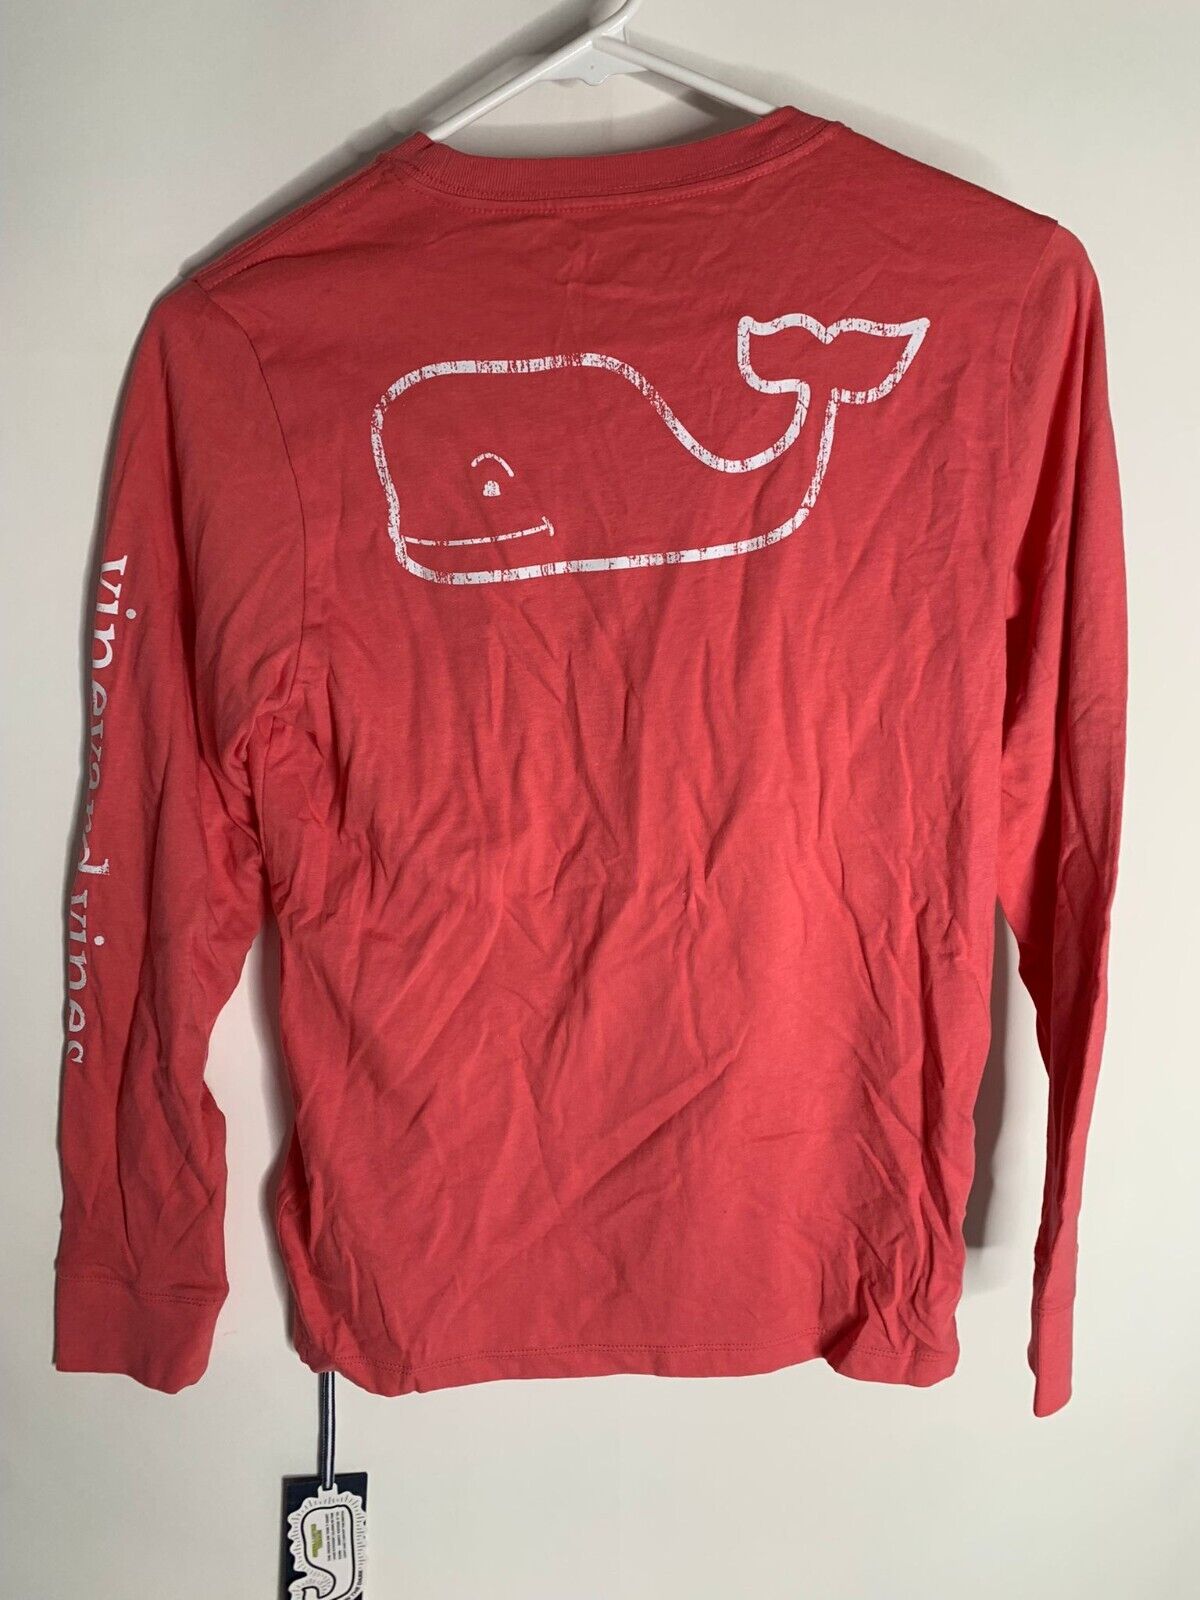 Vineyard Vines Boys M 12-14 Jetty Red Glow in the Dark Whale T Shirt